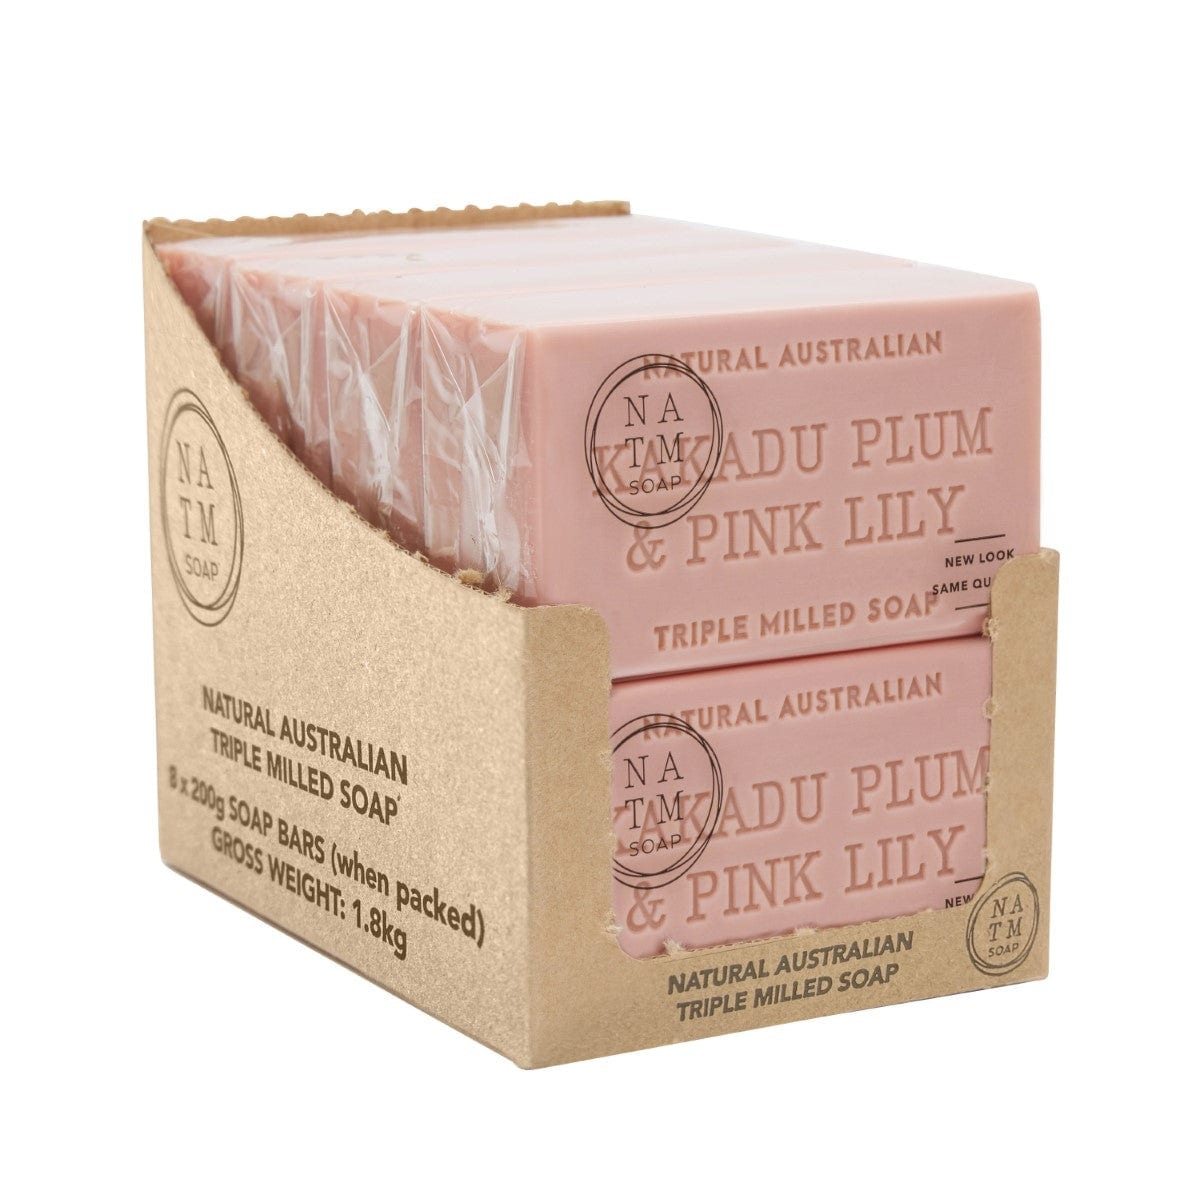 Natural Australian Triple Milled Kakadu Plum & Pink Lily Soap 8 x 200g